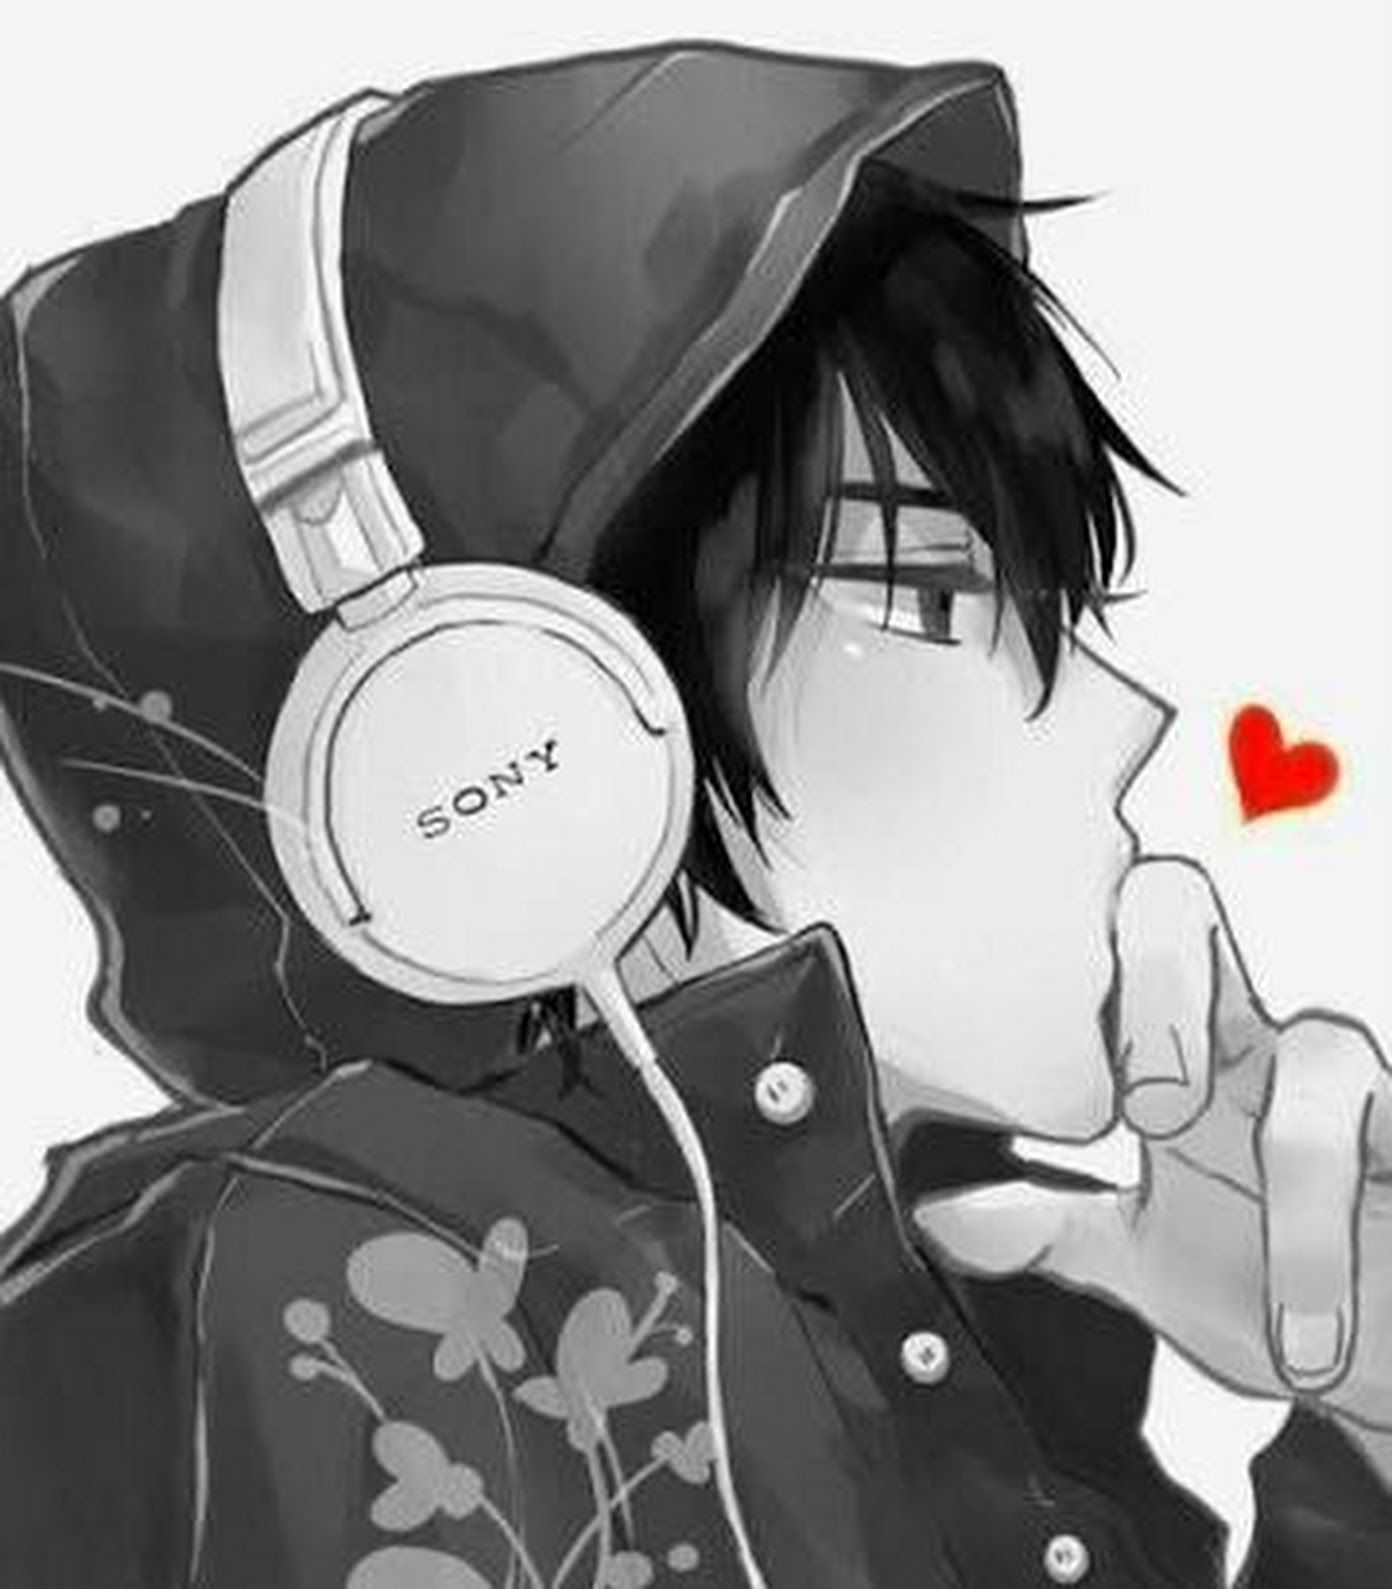 anime boy with headphones and hoodie